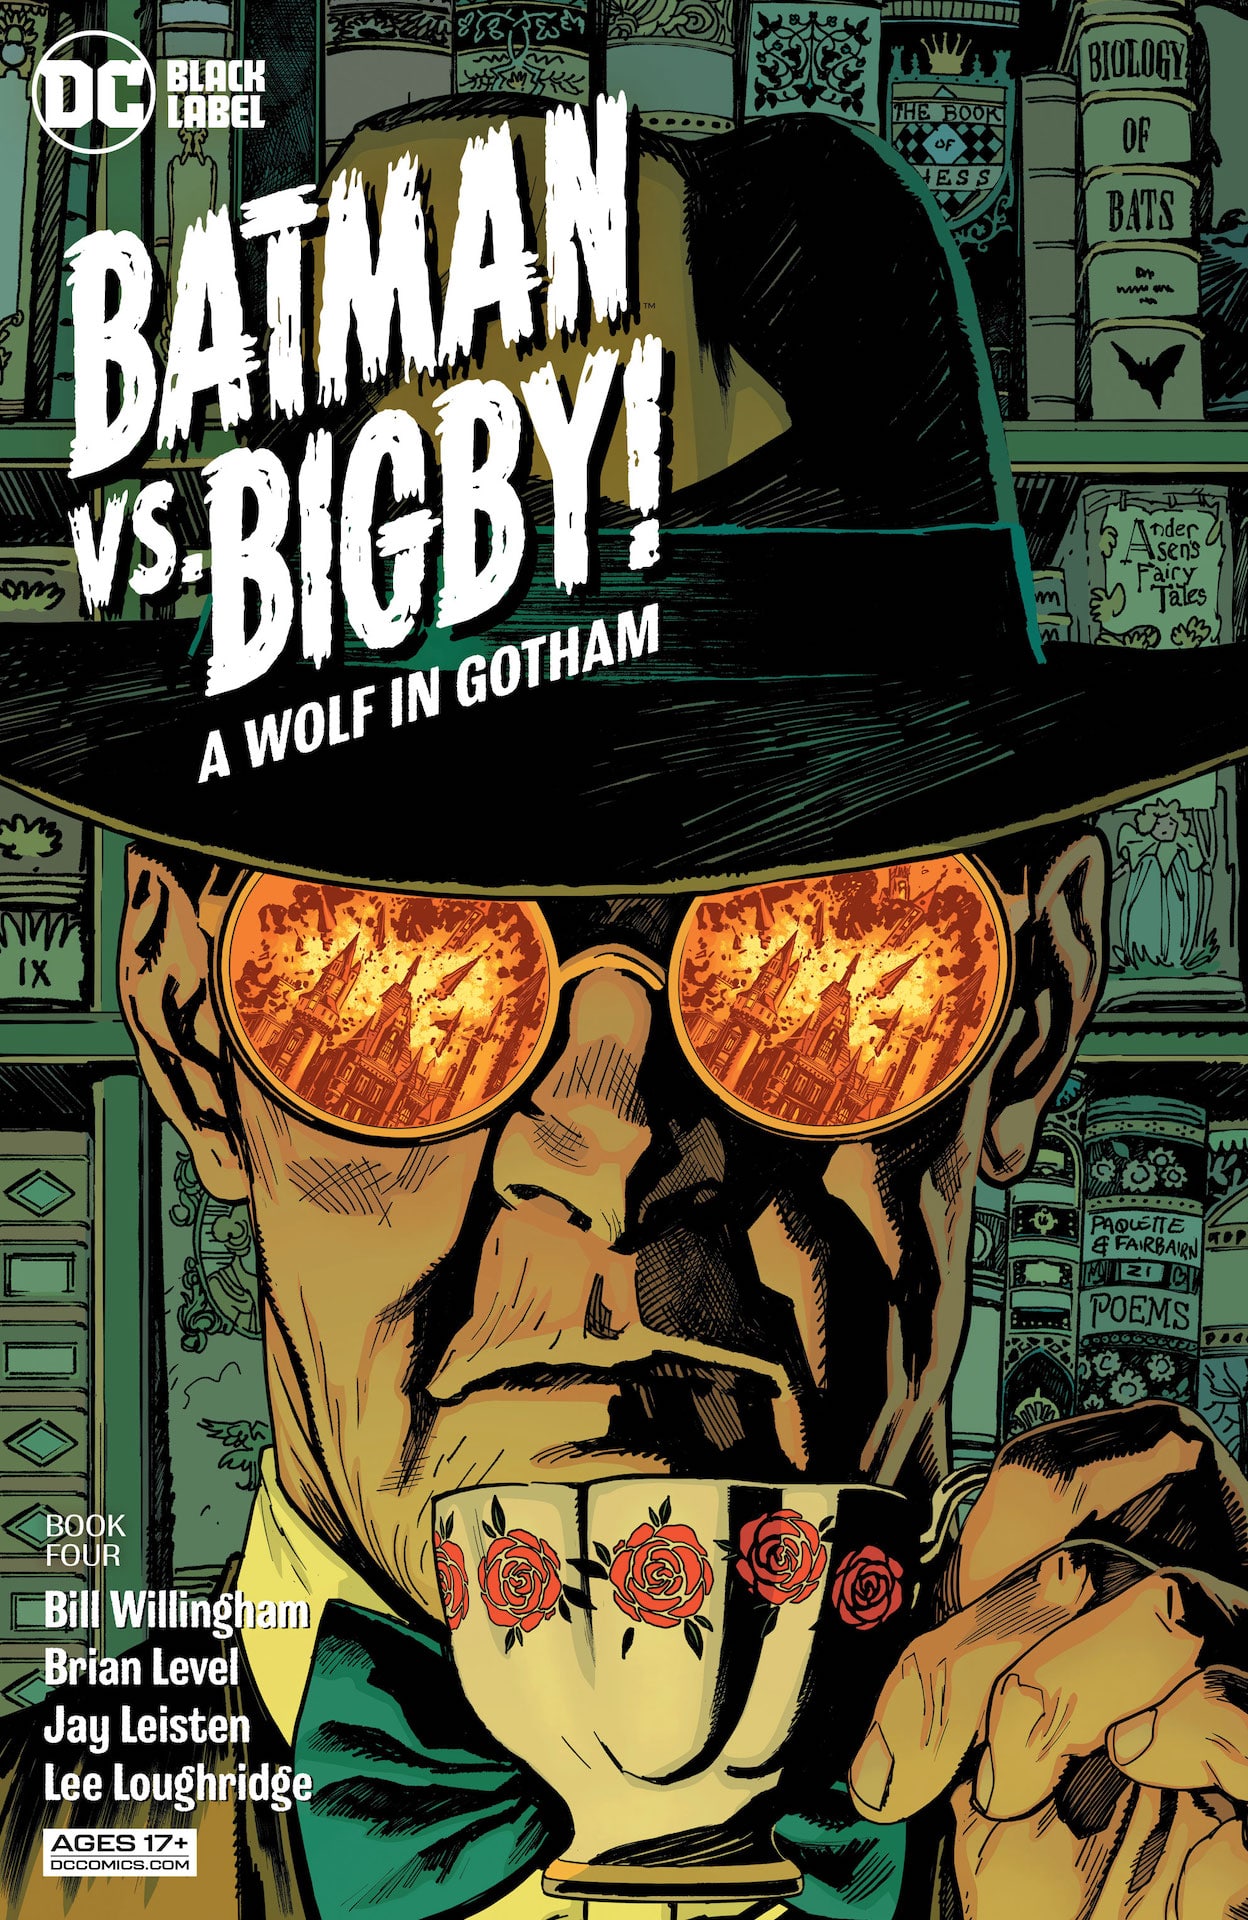 DC Preview: Batman Vs Bigby A Wolf In Gotham #4